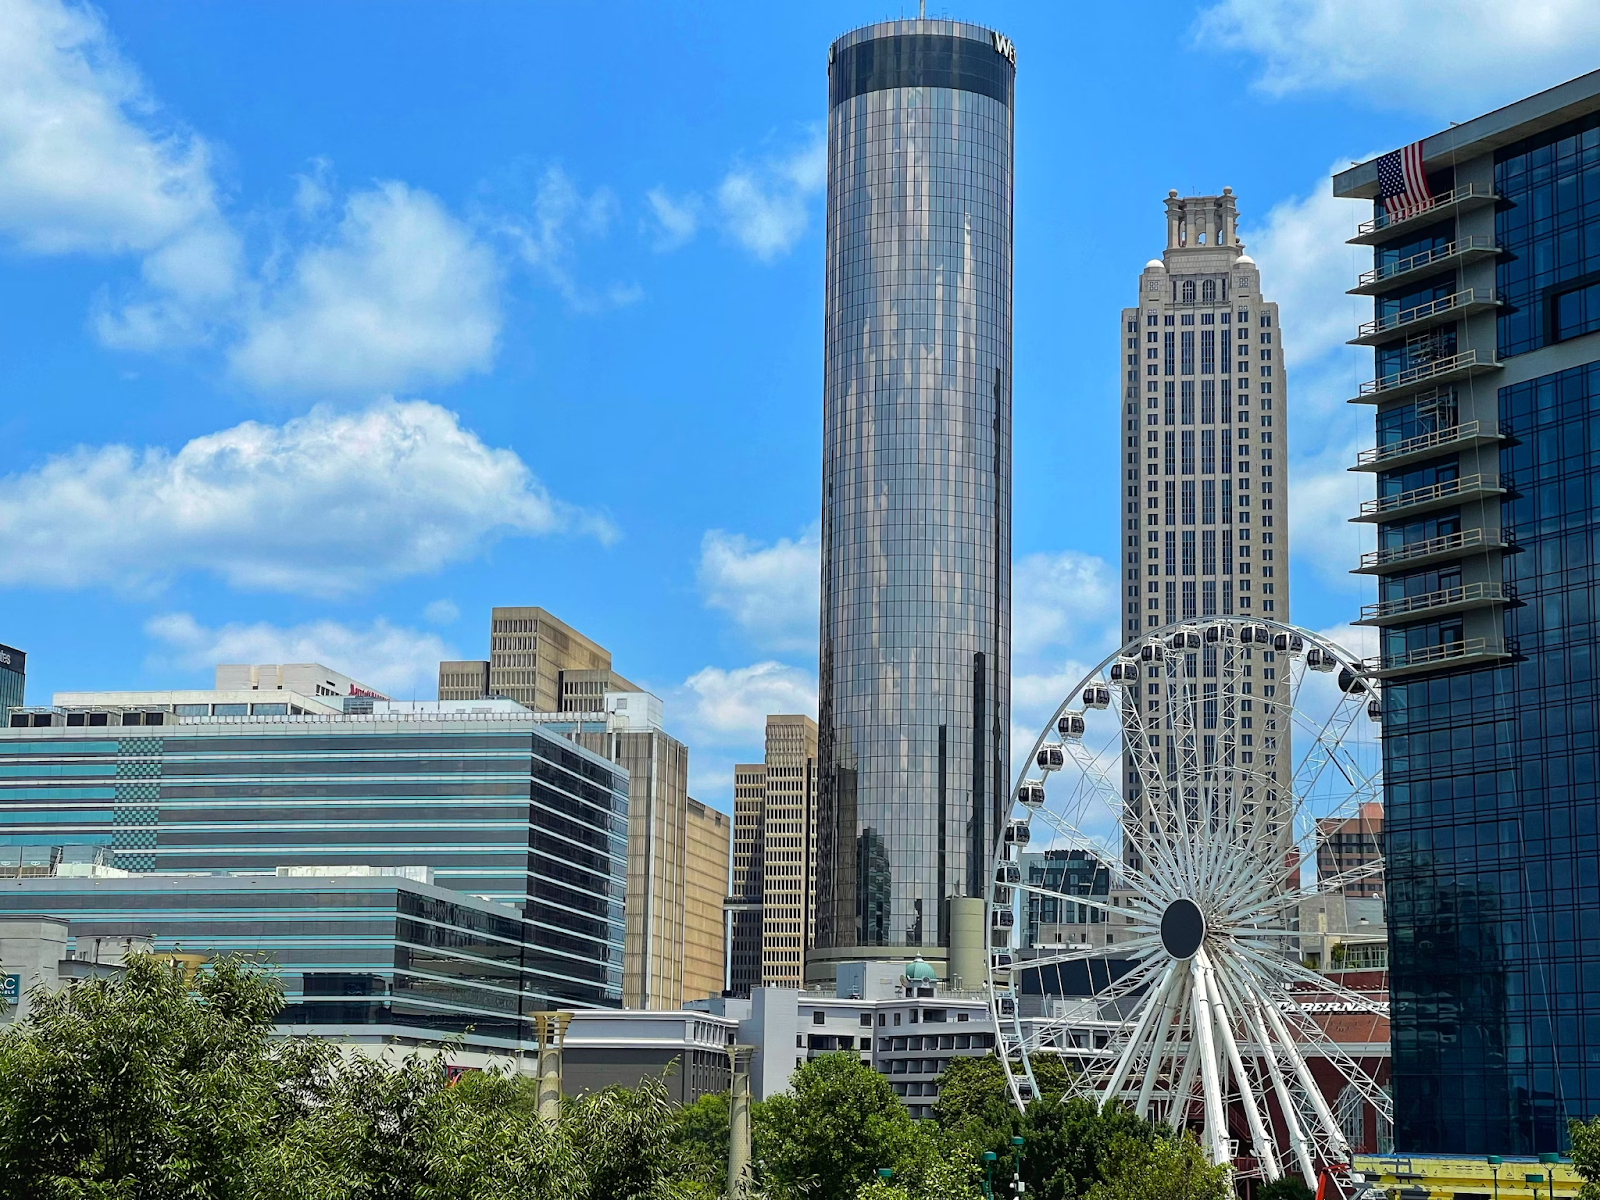 Atlanta cityscape featuring a Ferris wheel adjacent to tall buildings.